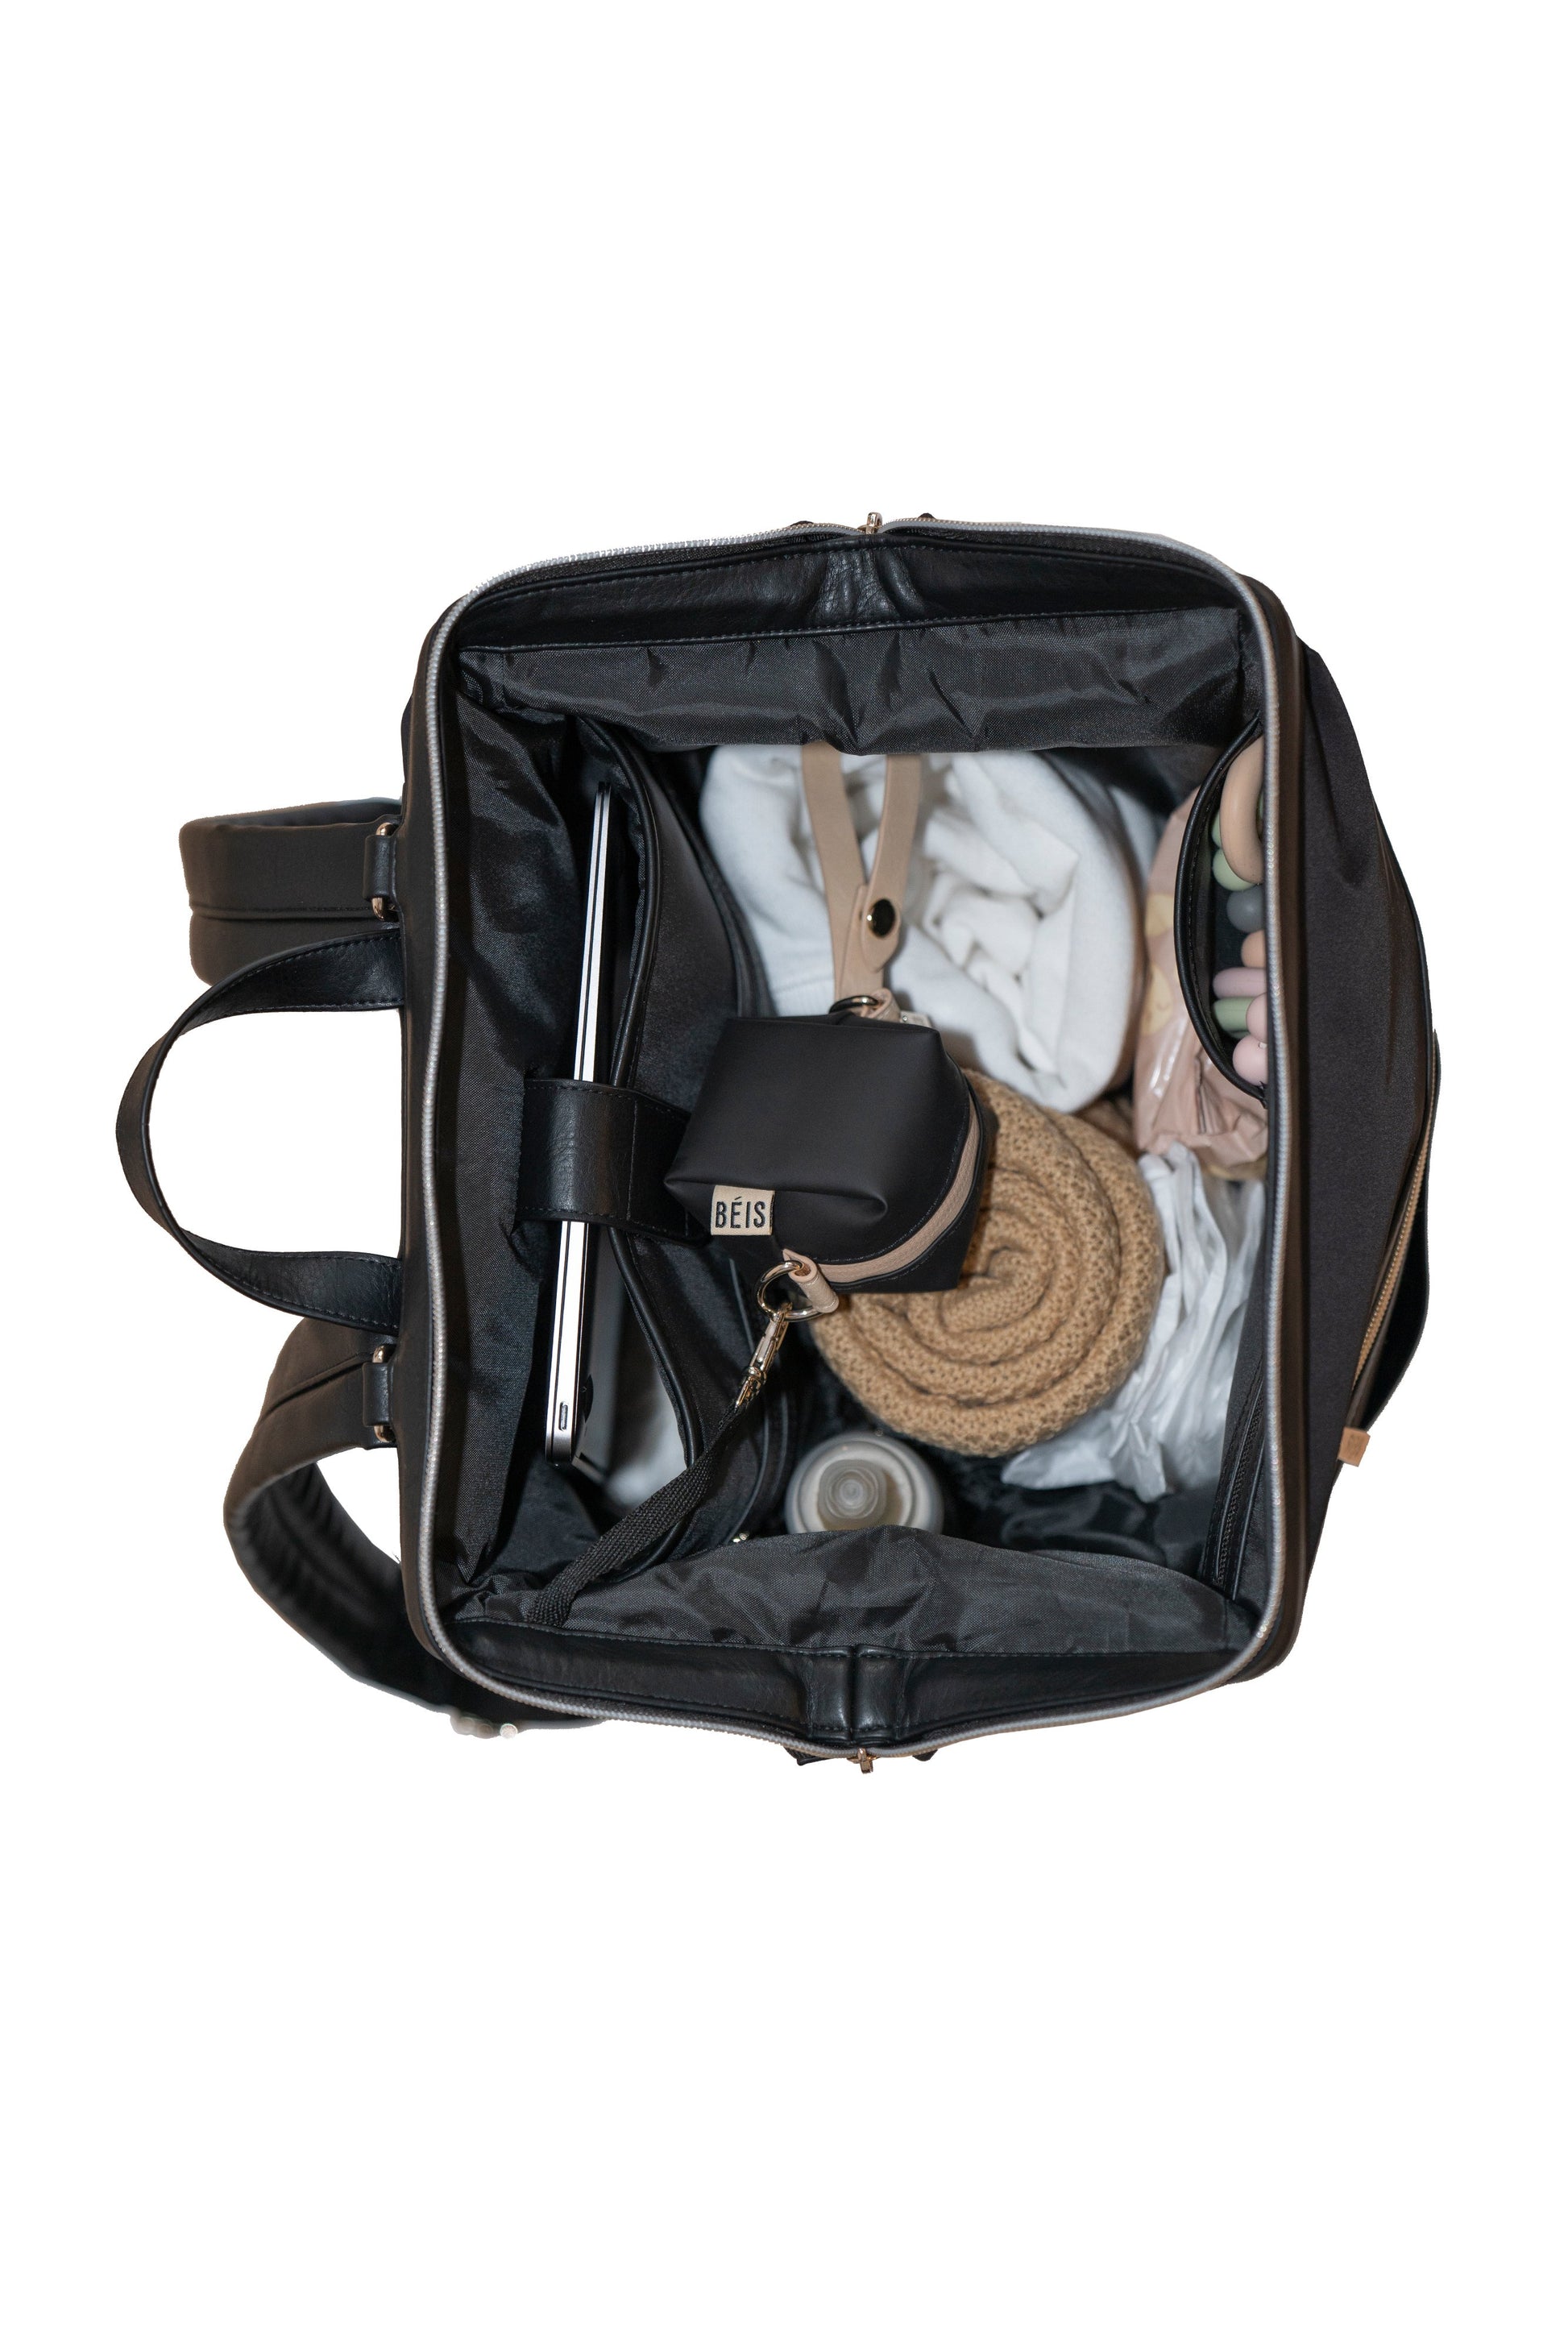 Backpack Diaper Bag Black Open Top Full